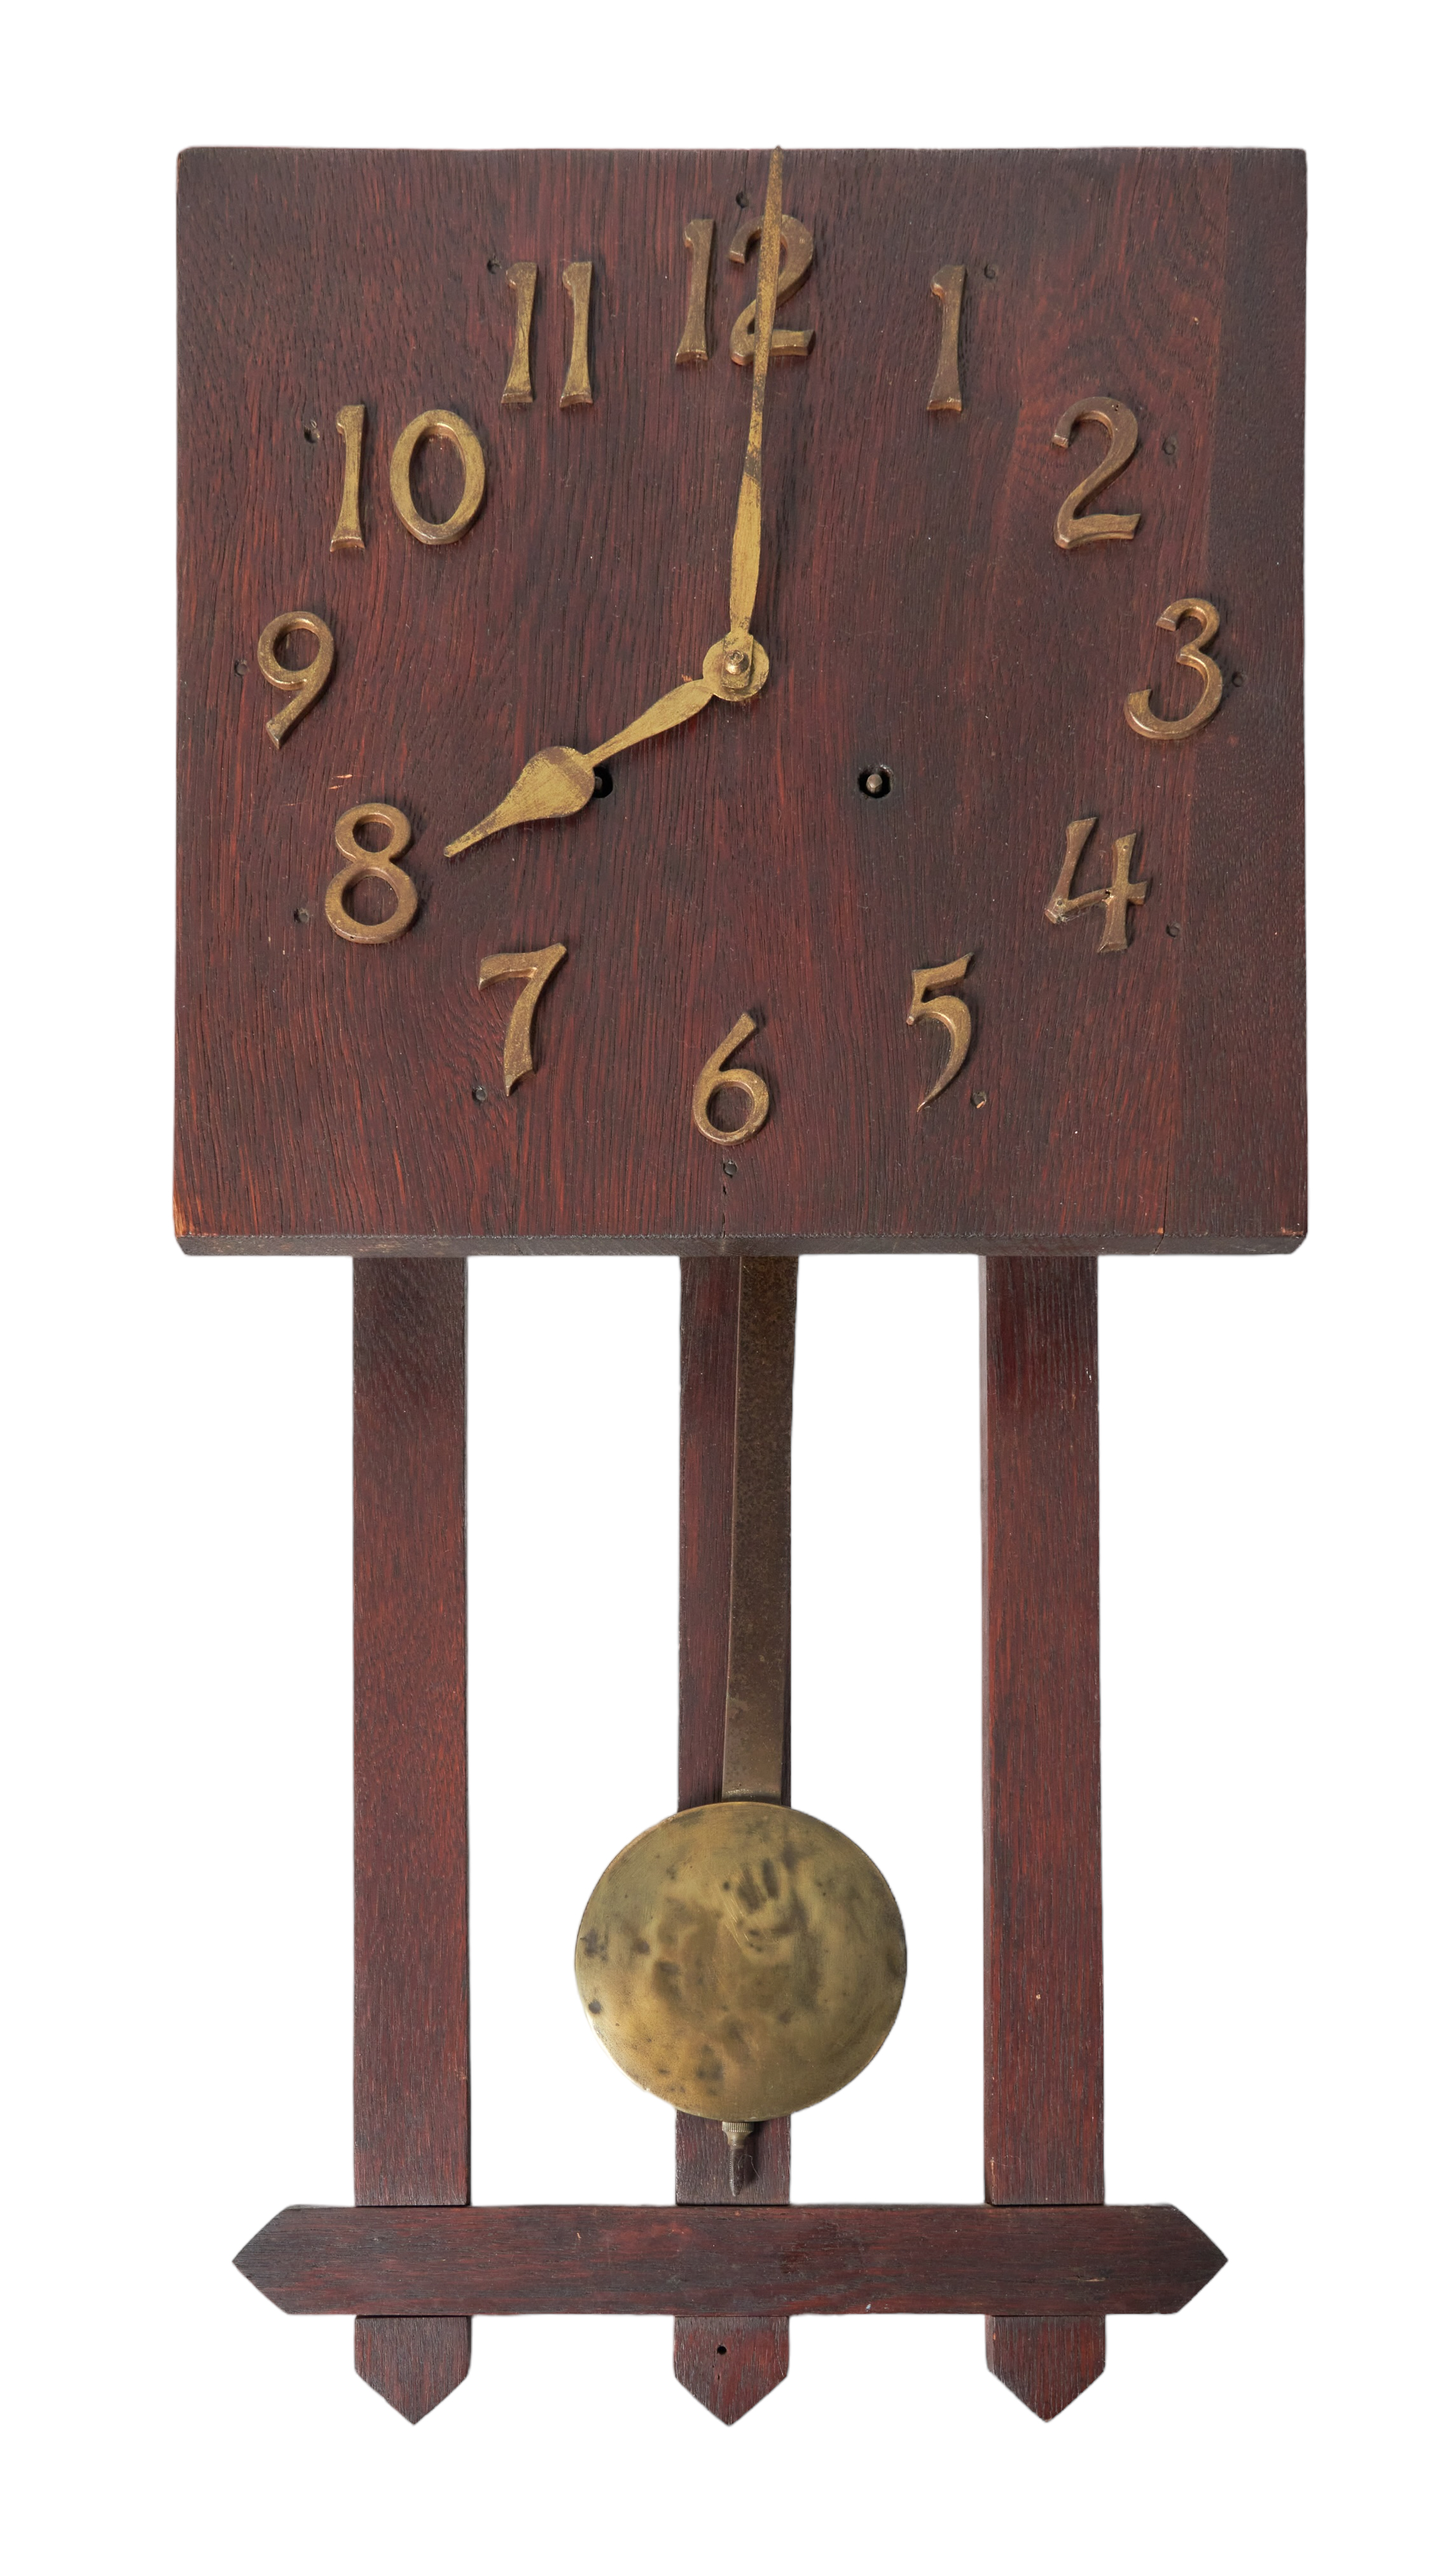 Ingraham Arts & Crafts wall clock, with